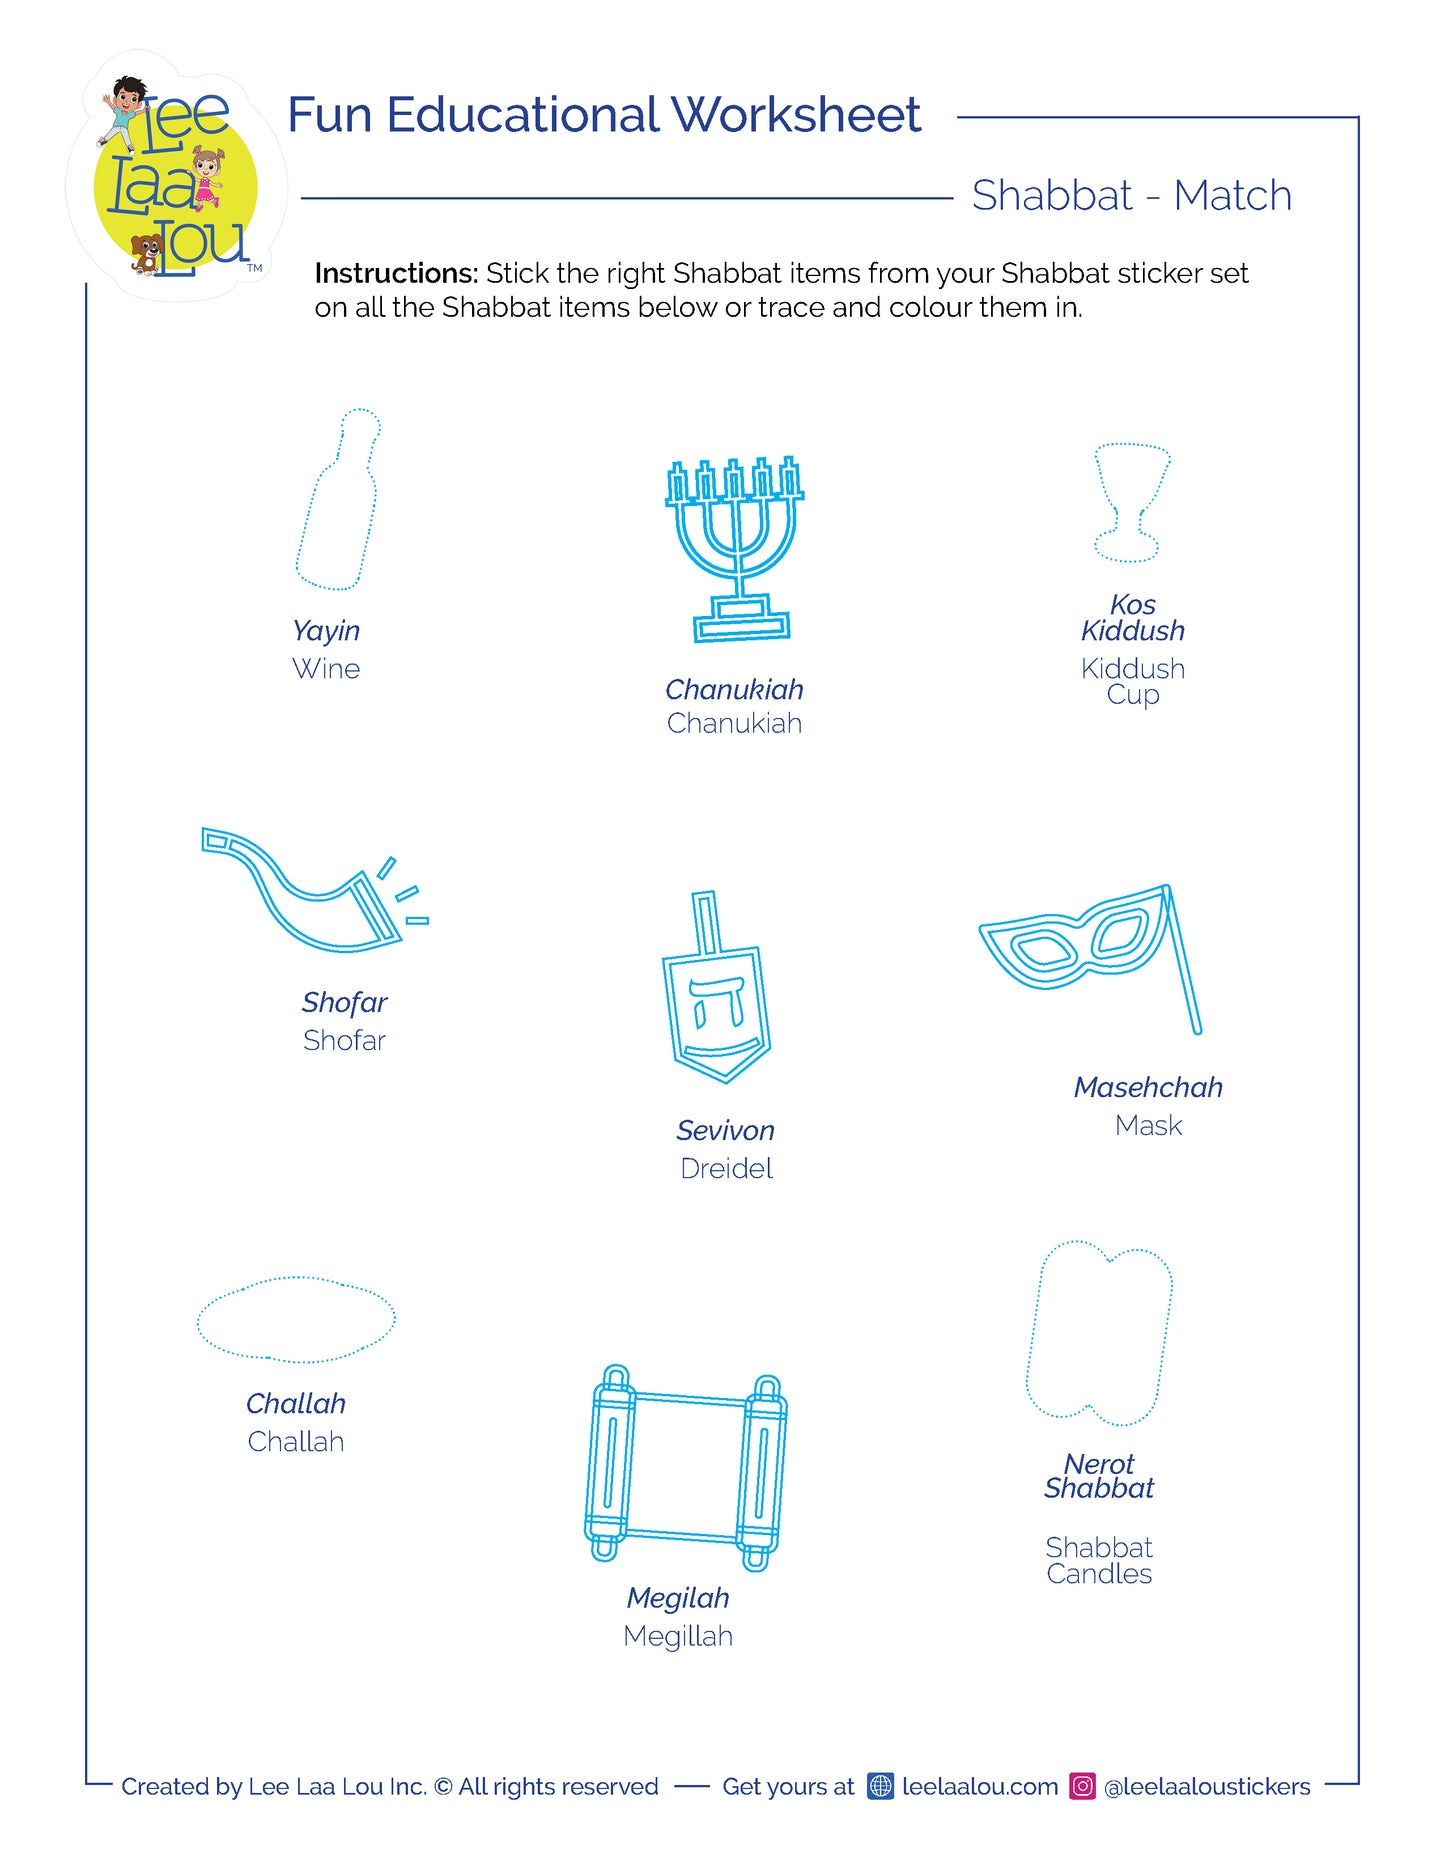 Shabbat Worksheet- match the items